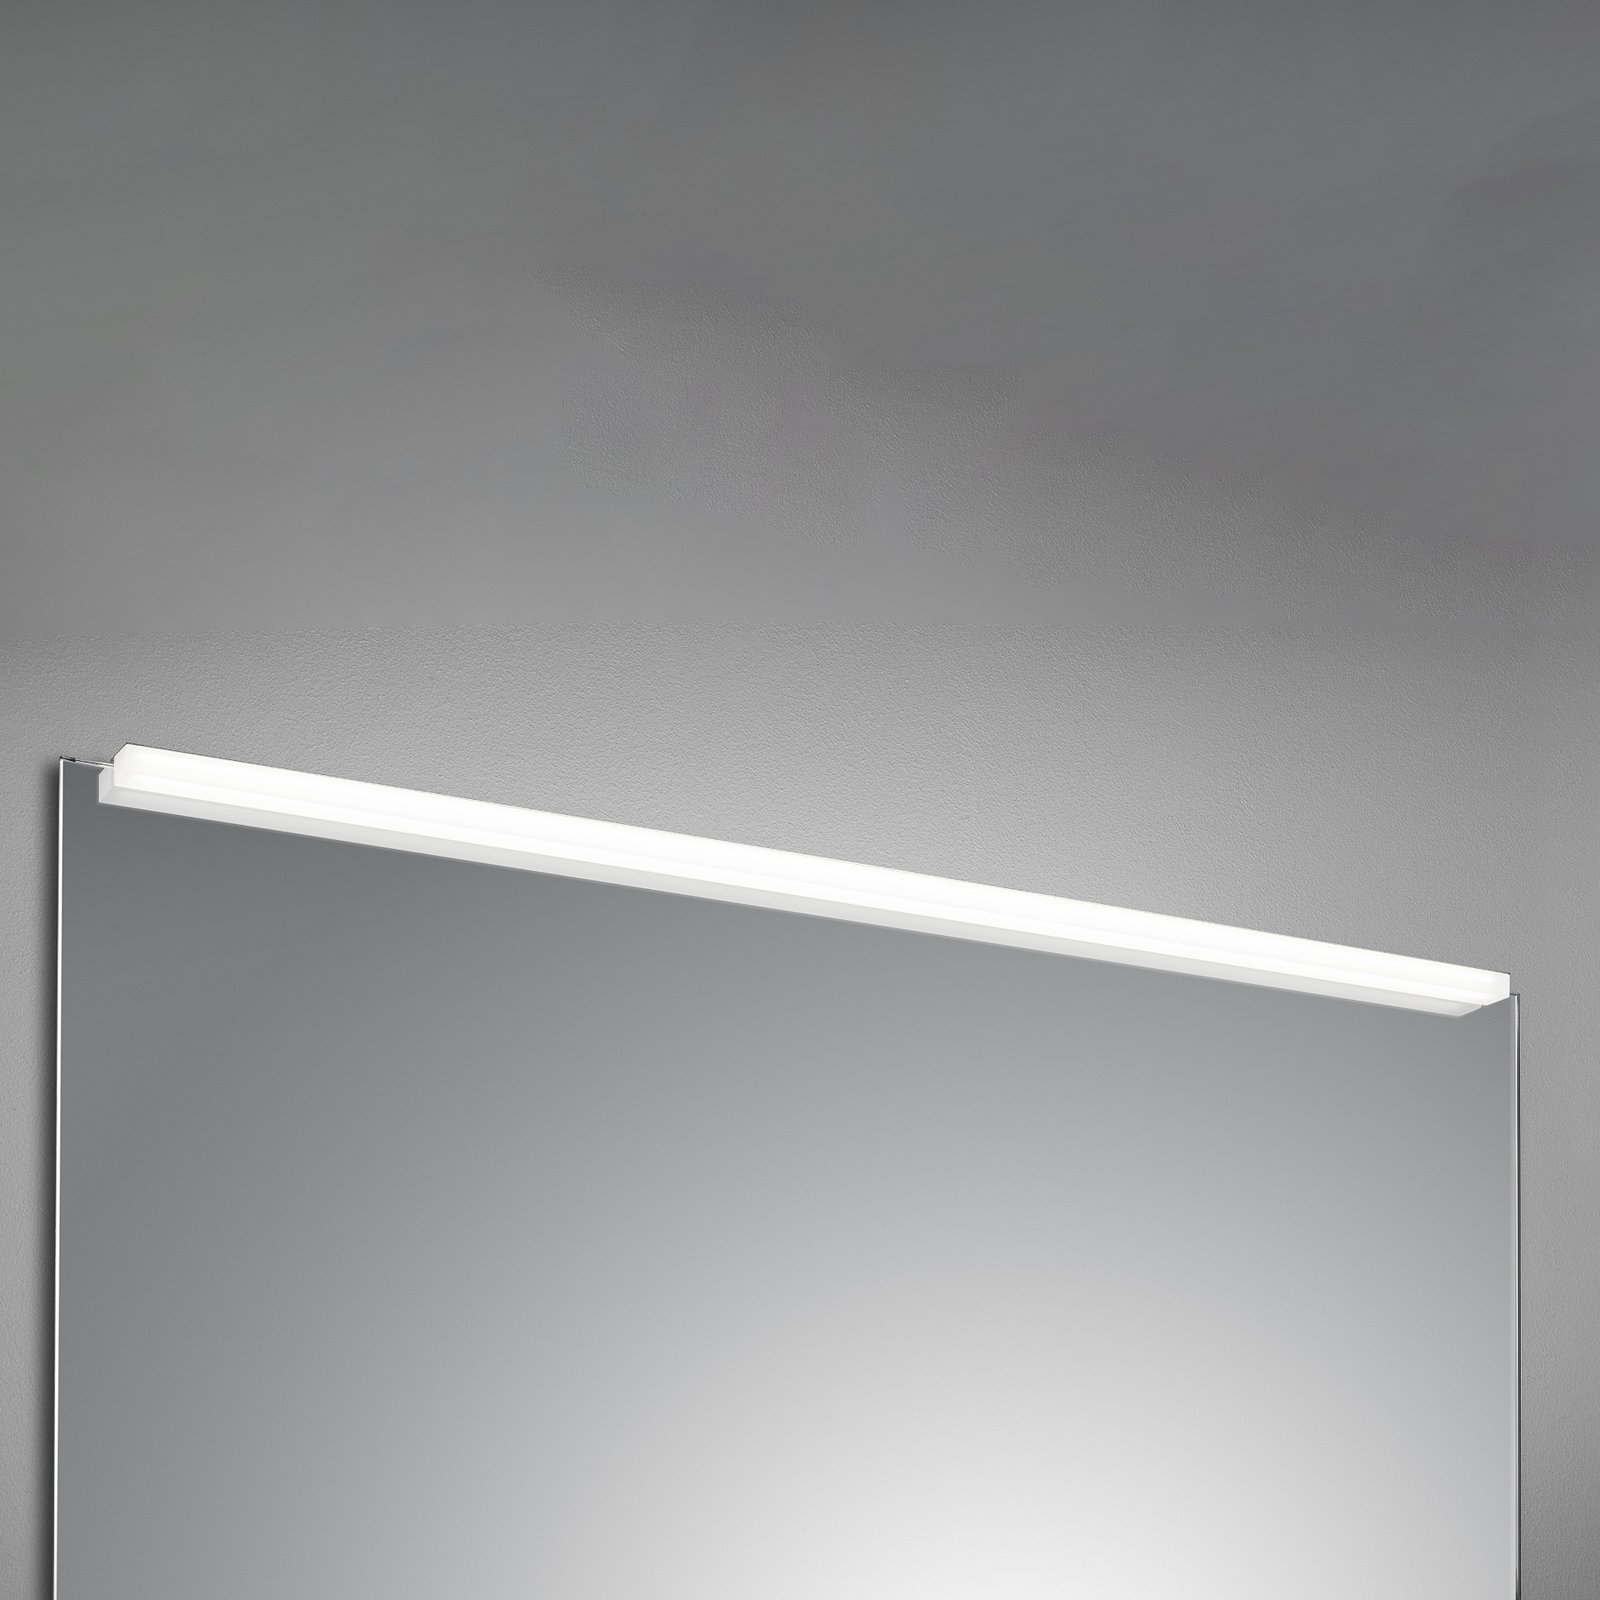 Helestra Onta LED mirror light, 120 cm